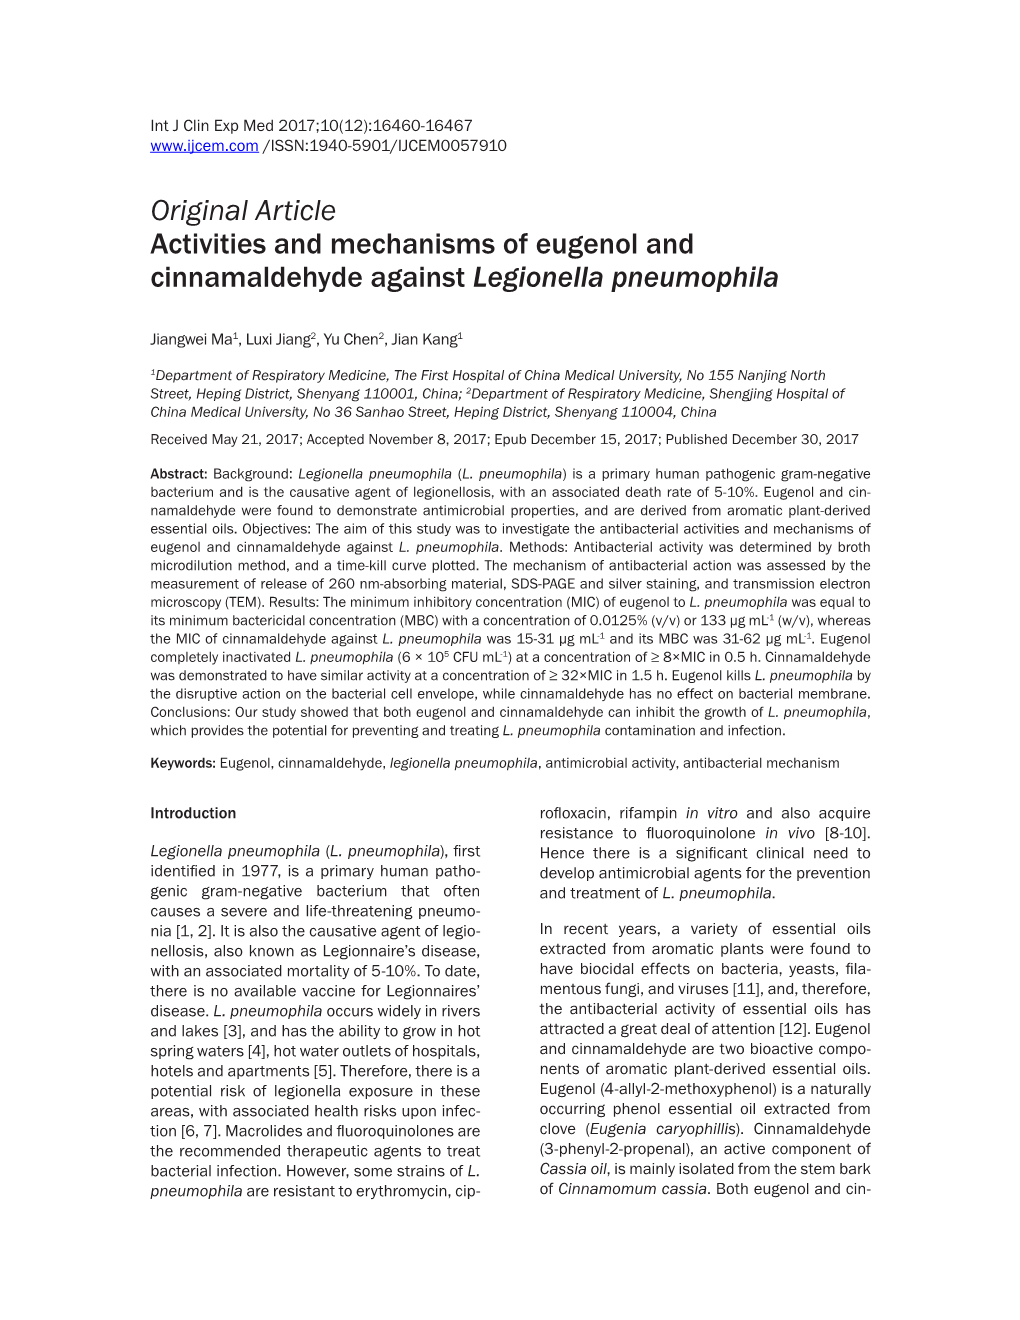 Original Article Activities and Mechanisms of Eugenol and Cinnamaldehyde Against Legionella Pneumophila